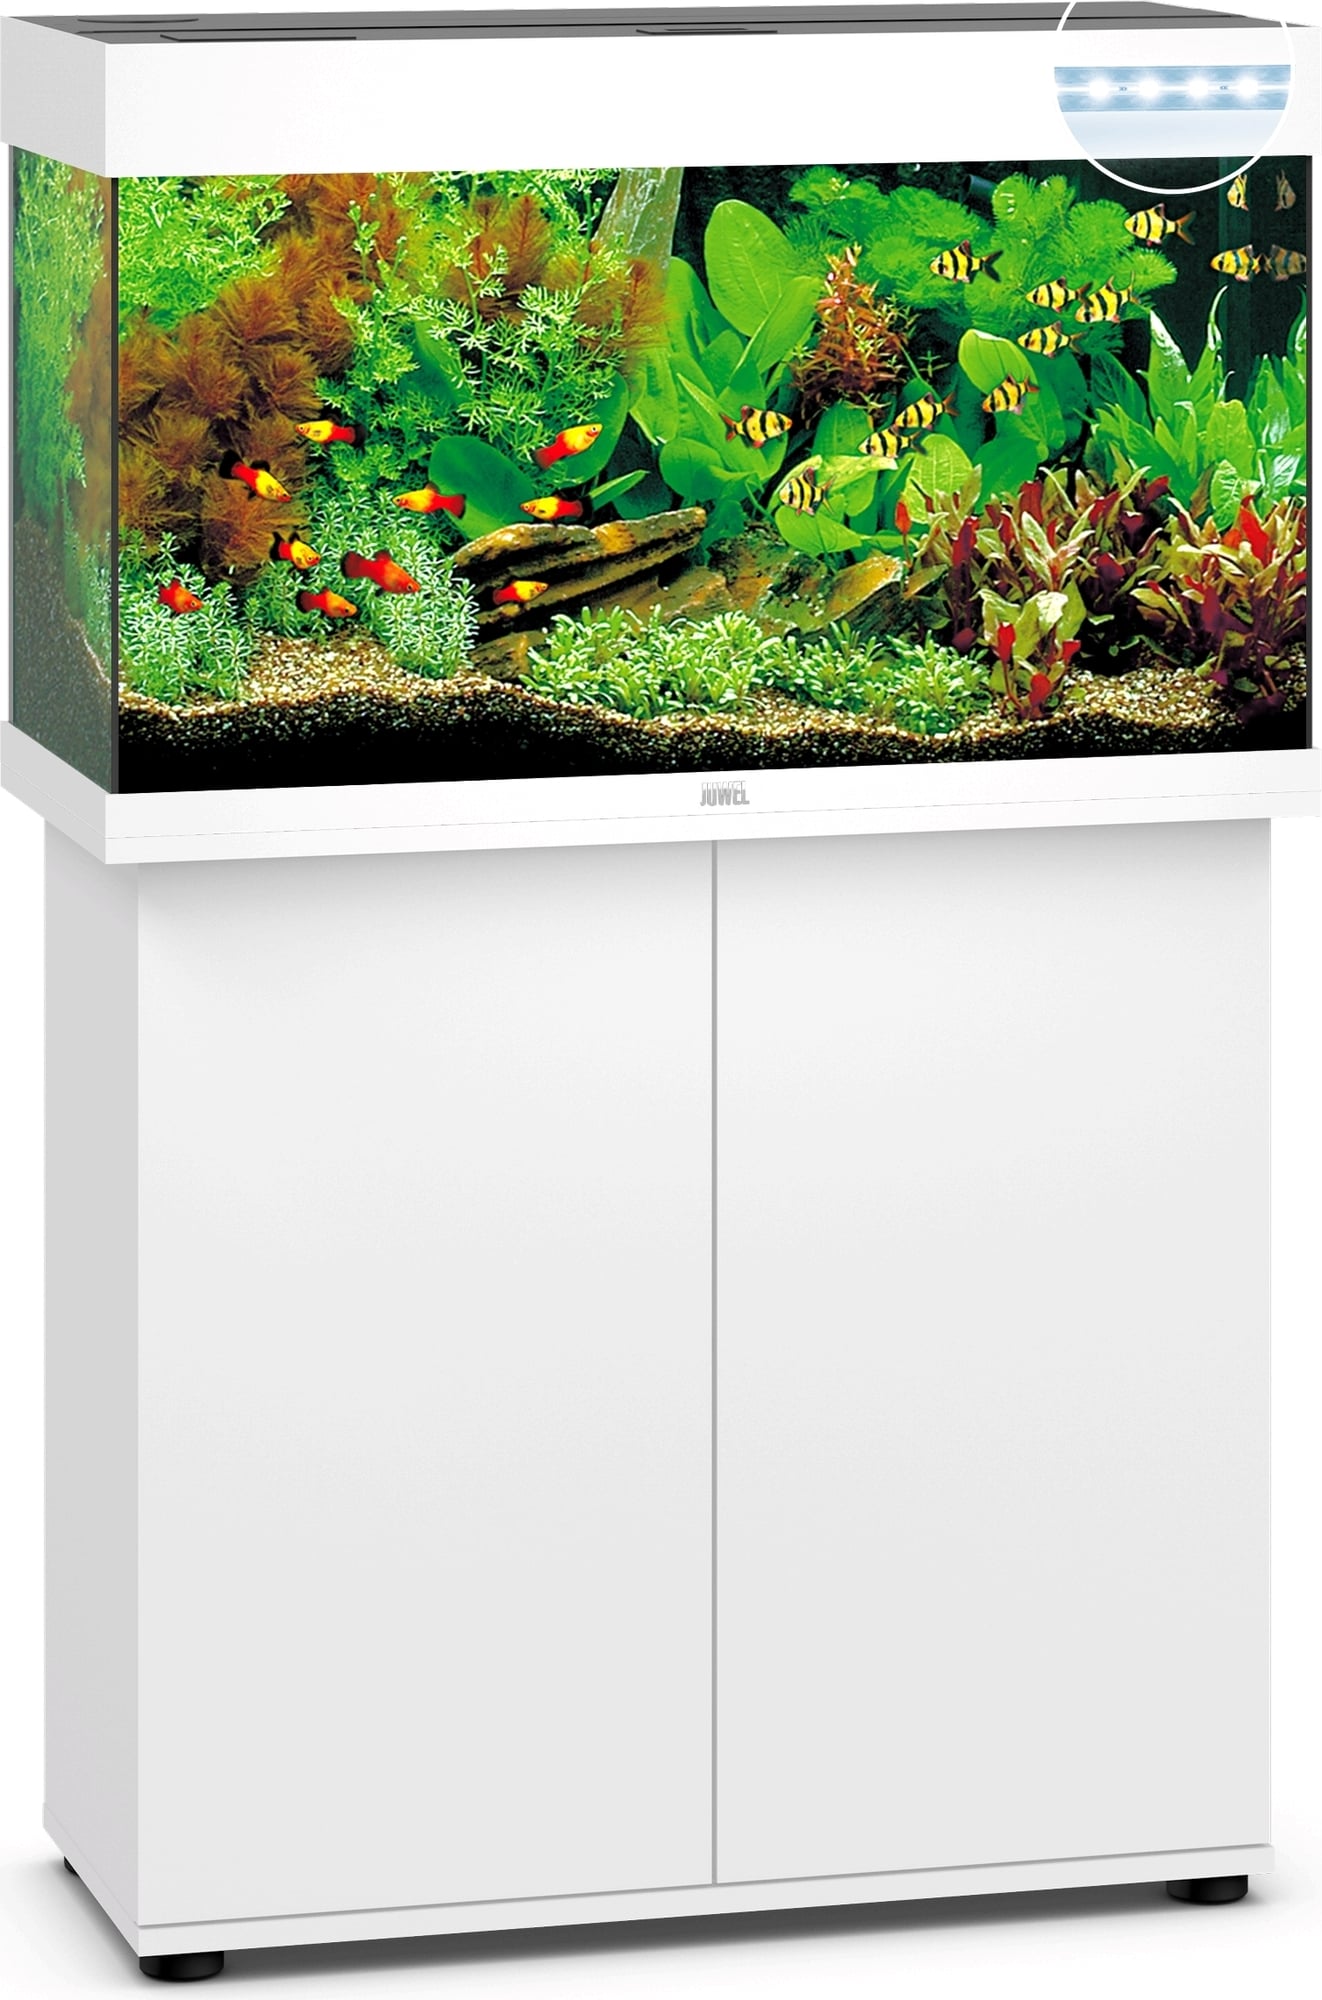 Juwel Aquarium & Cabinet Rio 125 LED / White